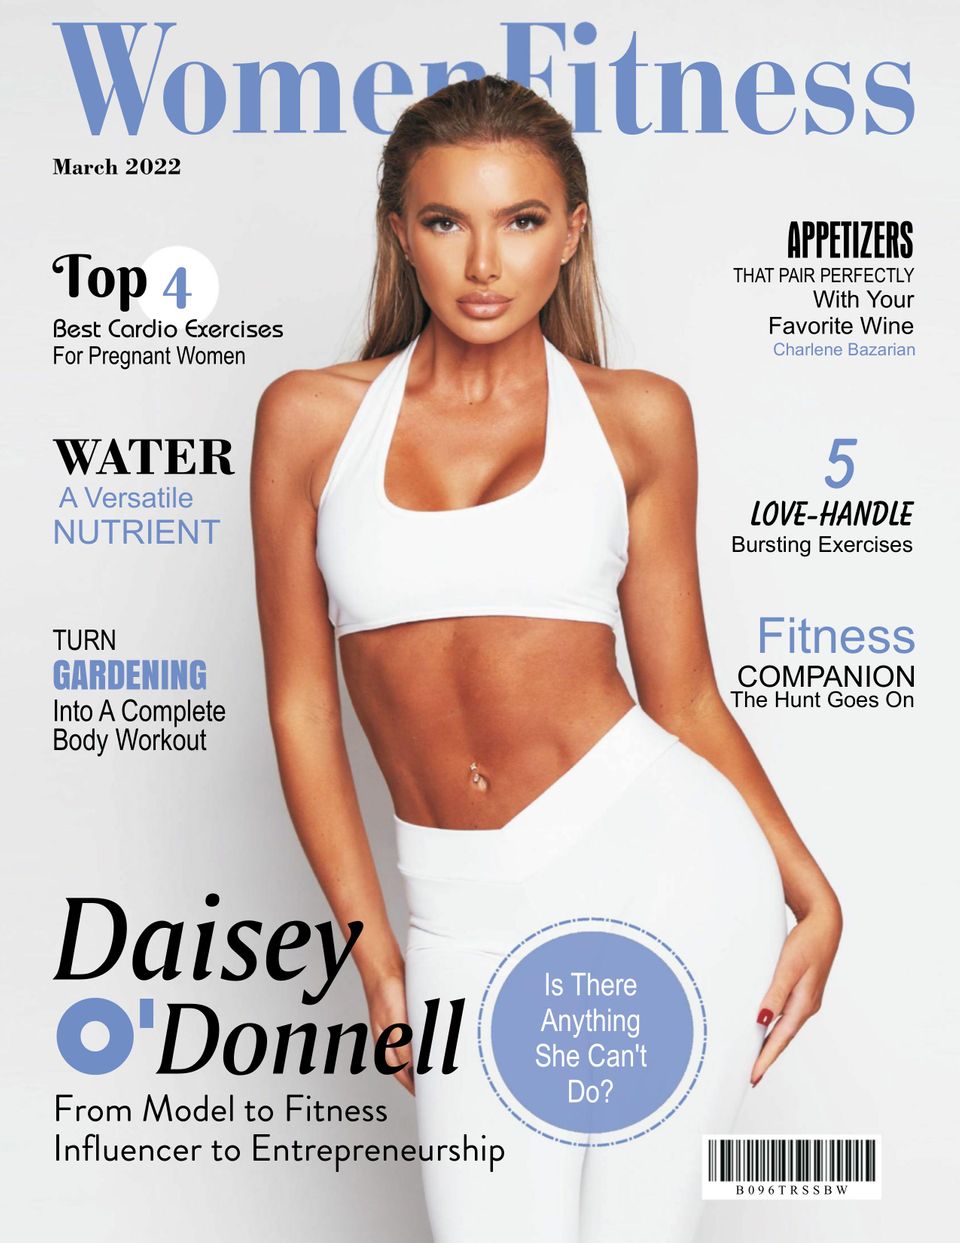 The 5 Best Women's Fitness Magazines